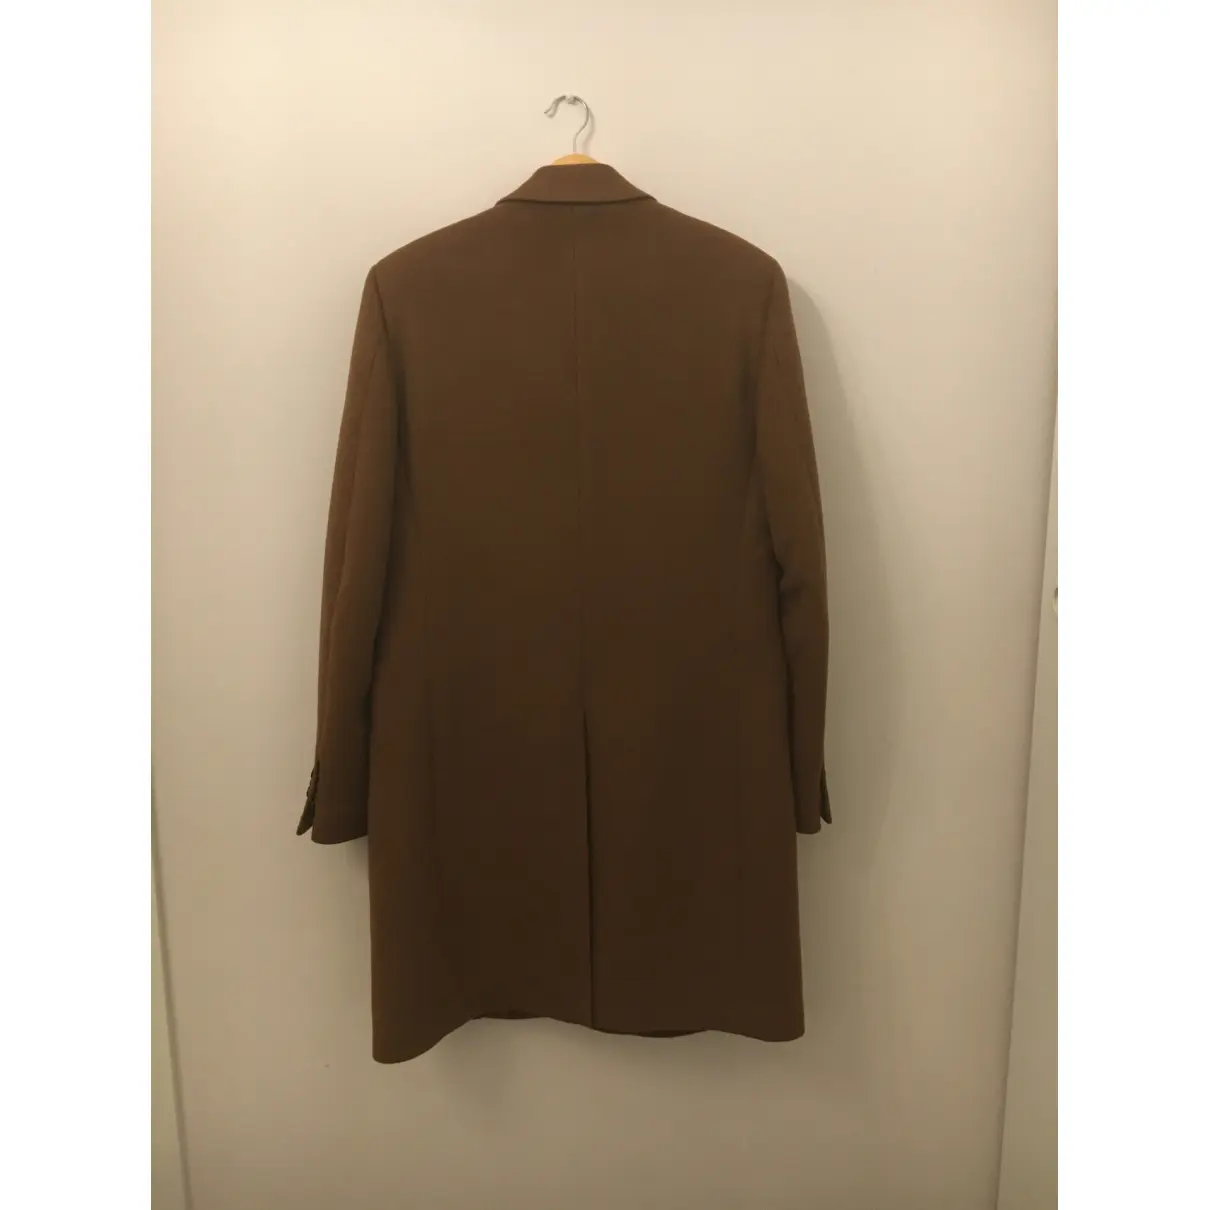 Buy Fendi Cashmere coat online